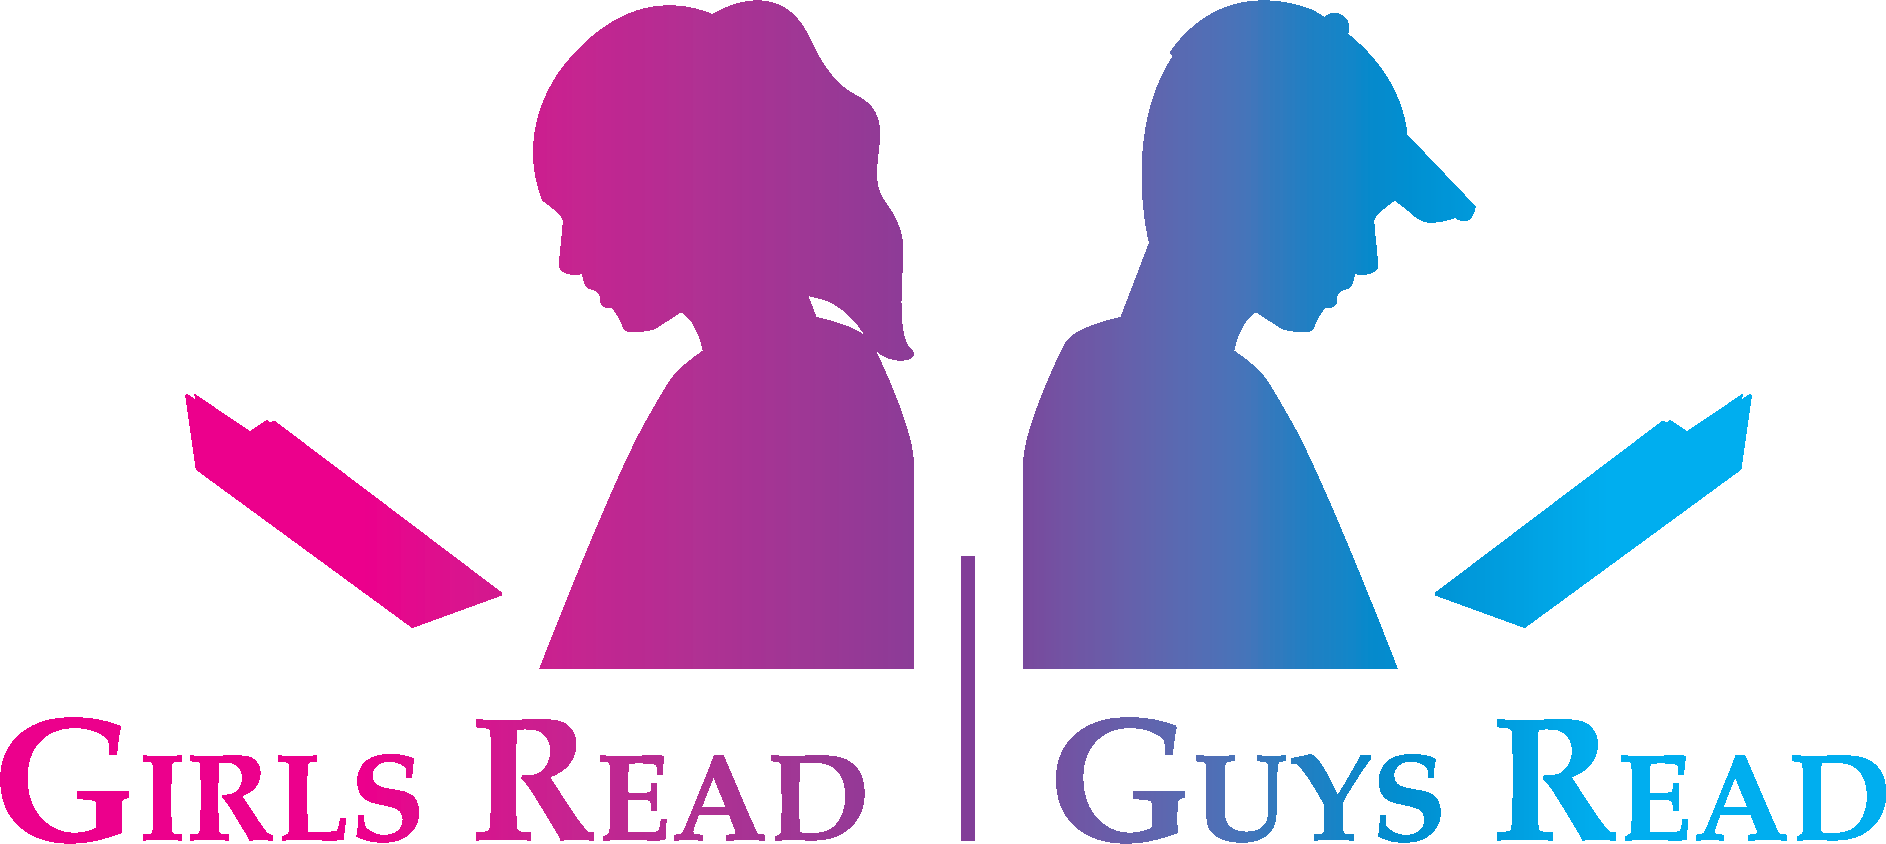 Girls Read - Guys Read (1886x844)